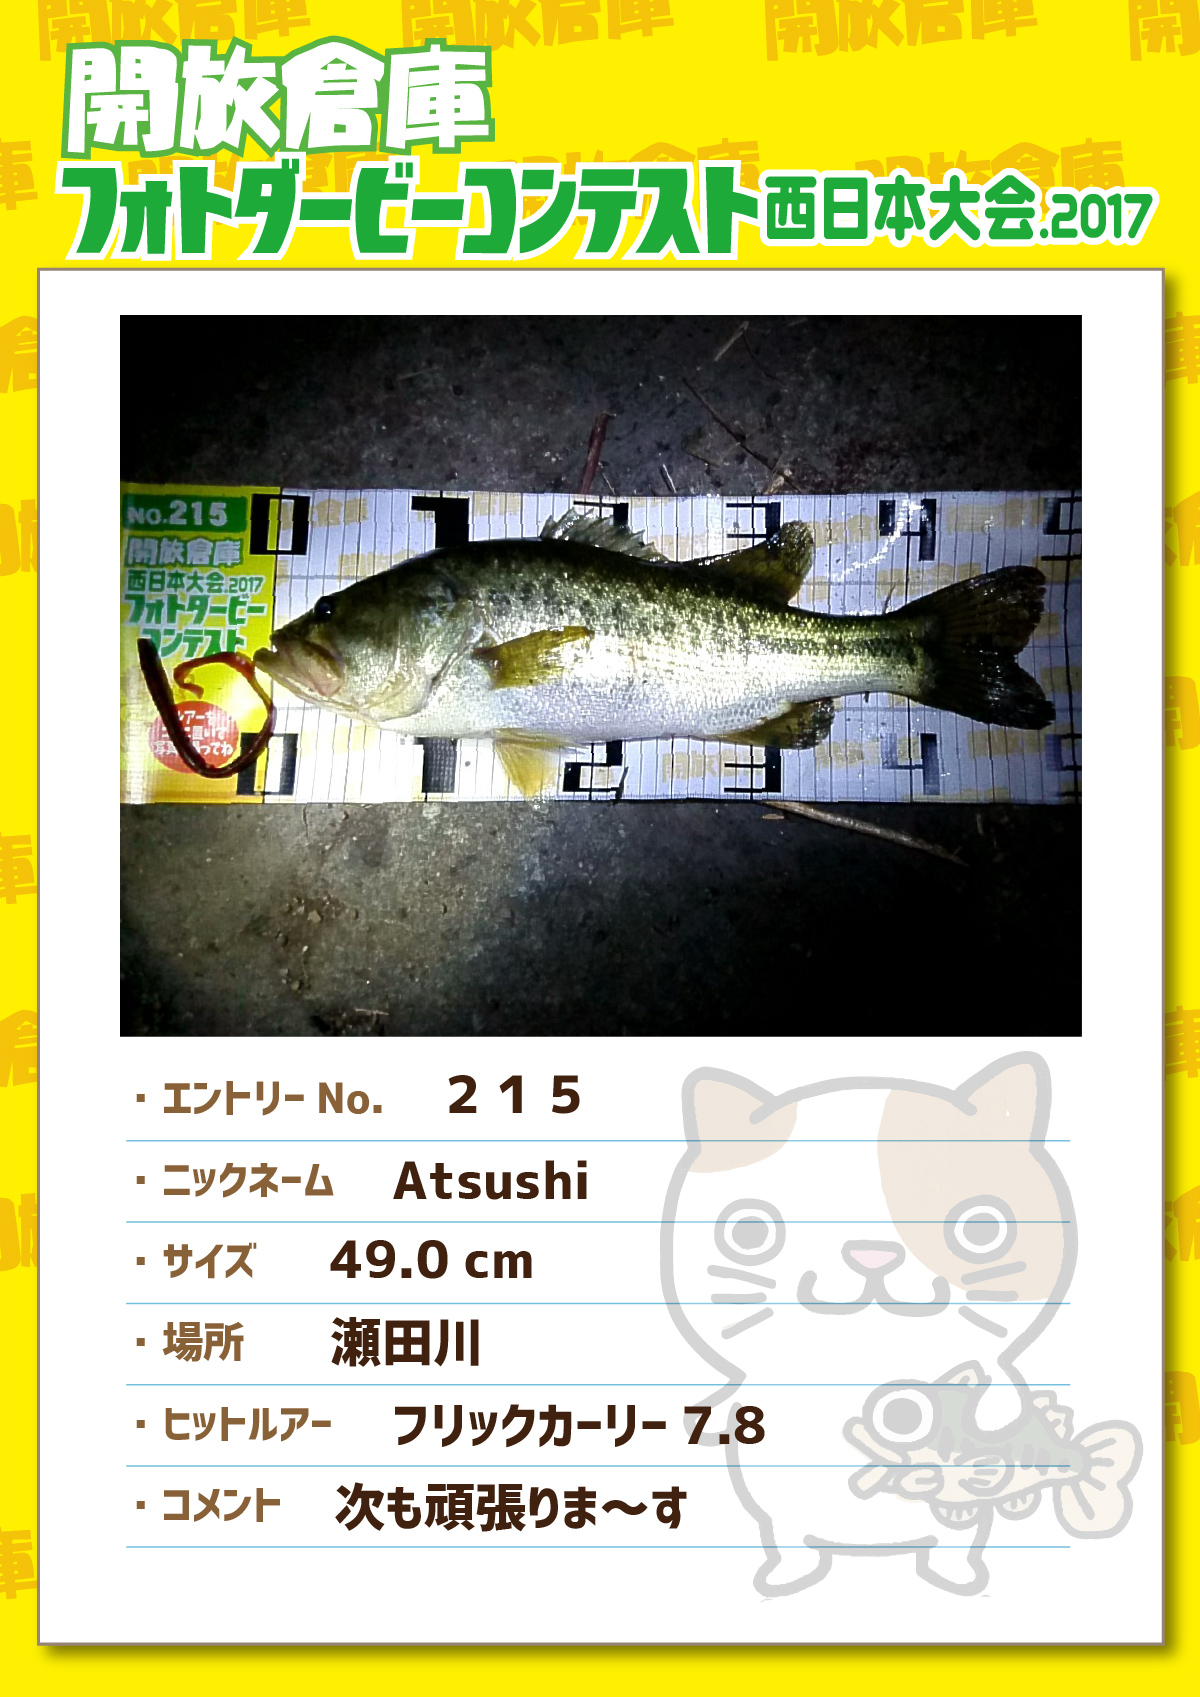 No.215 Atsushi 49.0cm 瀬田川 フリックカーリー7.8 次も頑張りまーす